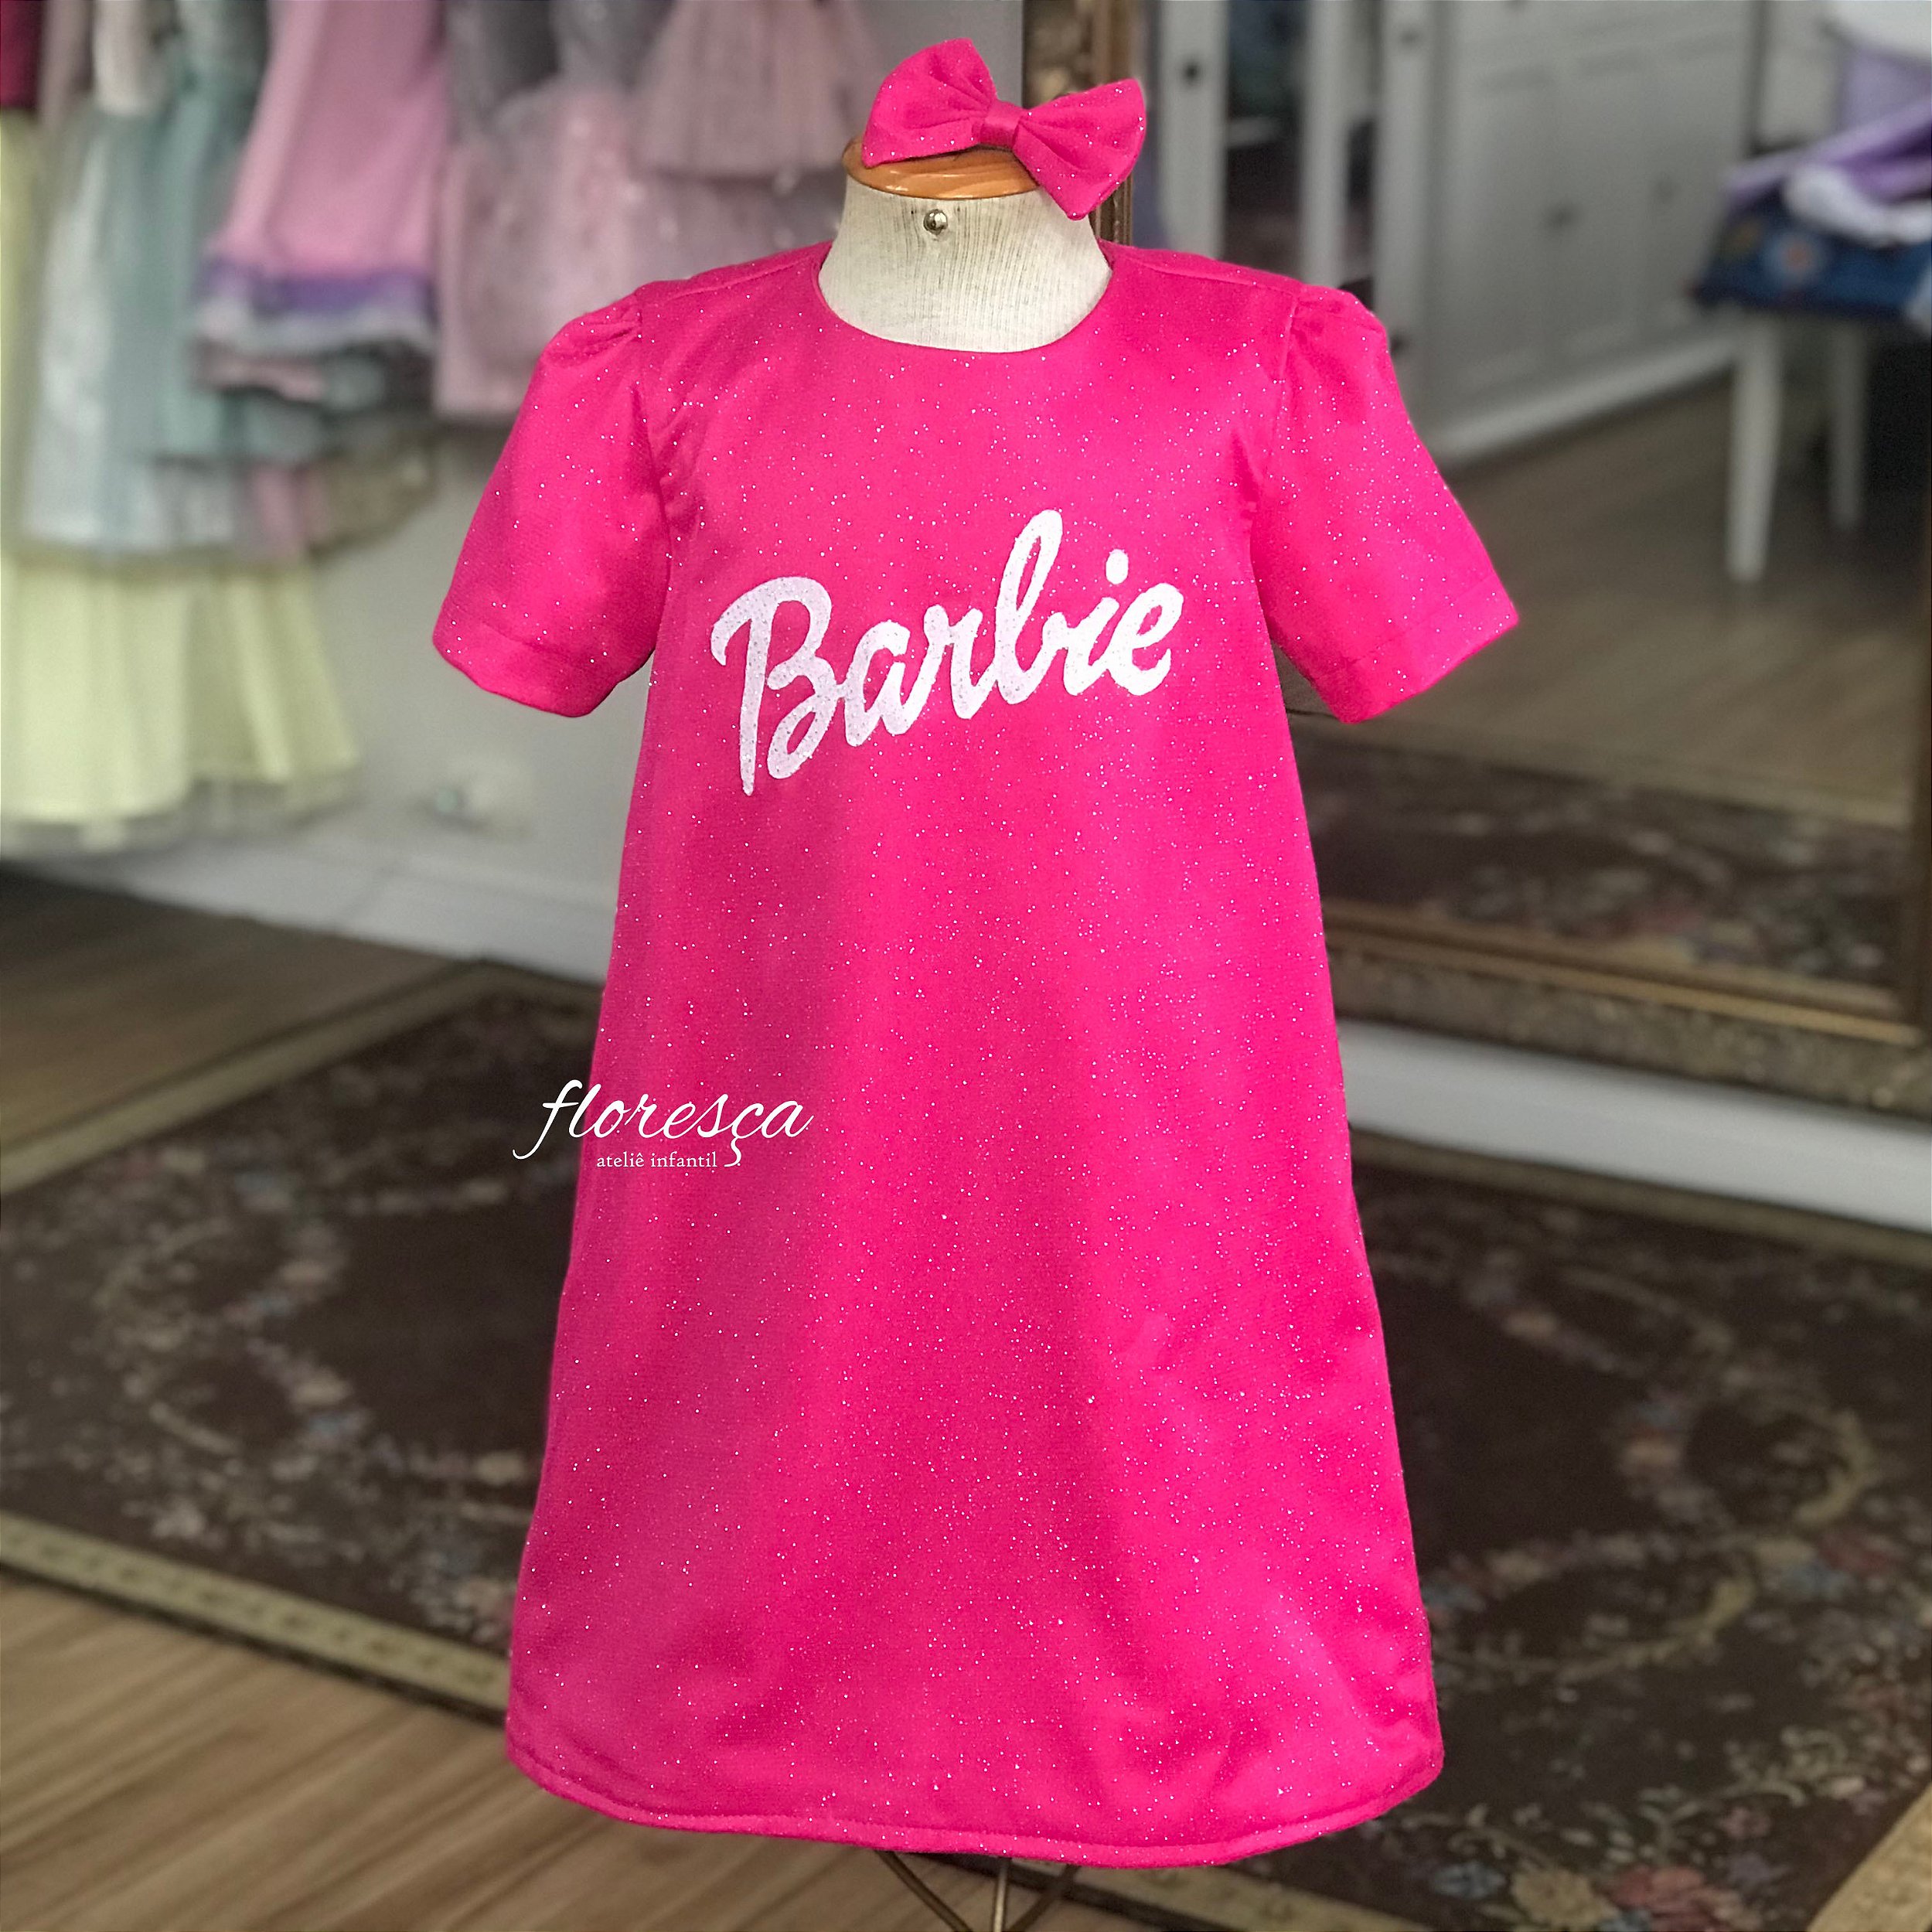 Vestido Barbie Aniversario